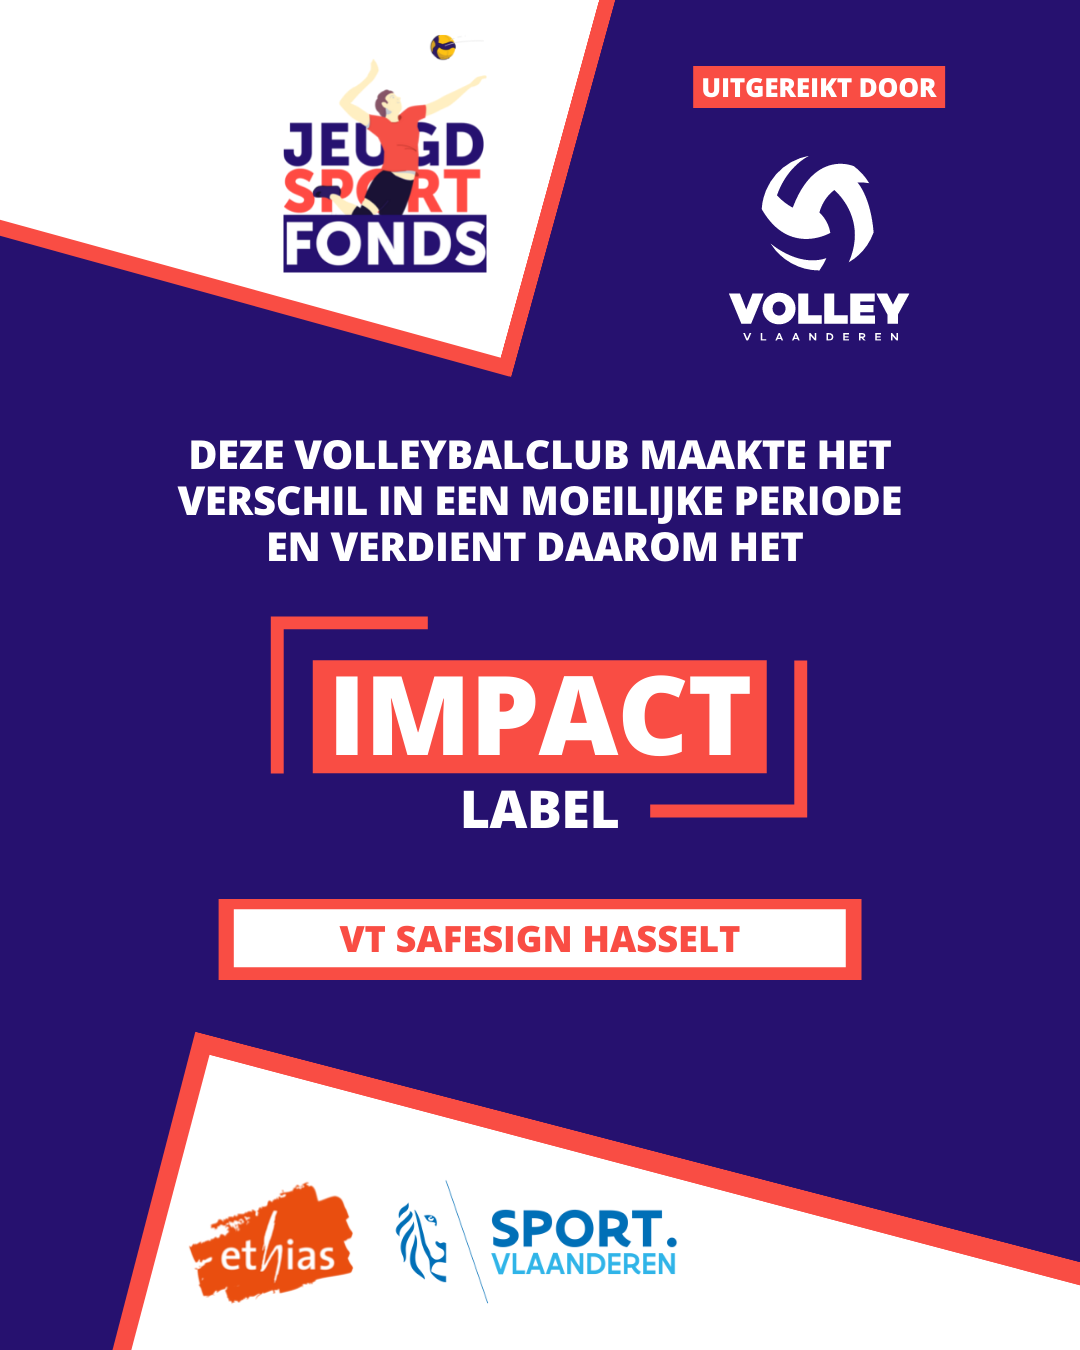 VT SafeSign Hasselt kreeg het IMPACT label